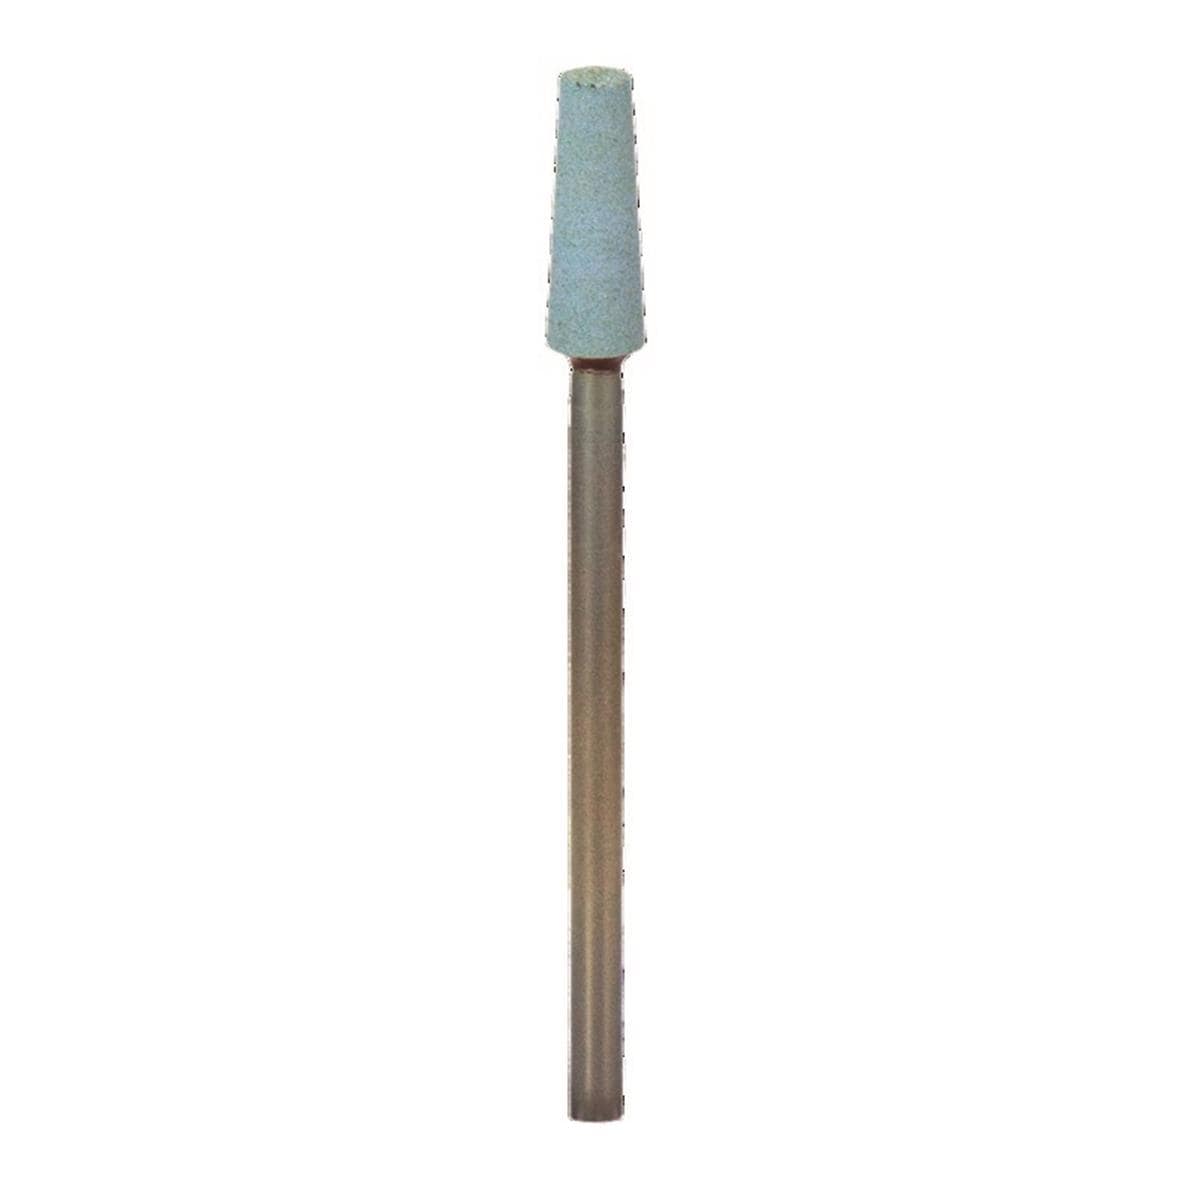 Pointe cylindro-conique en cramique diamtre moyen 4mm x 13mm MESTRA